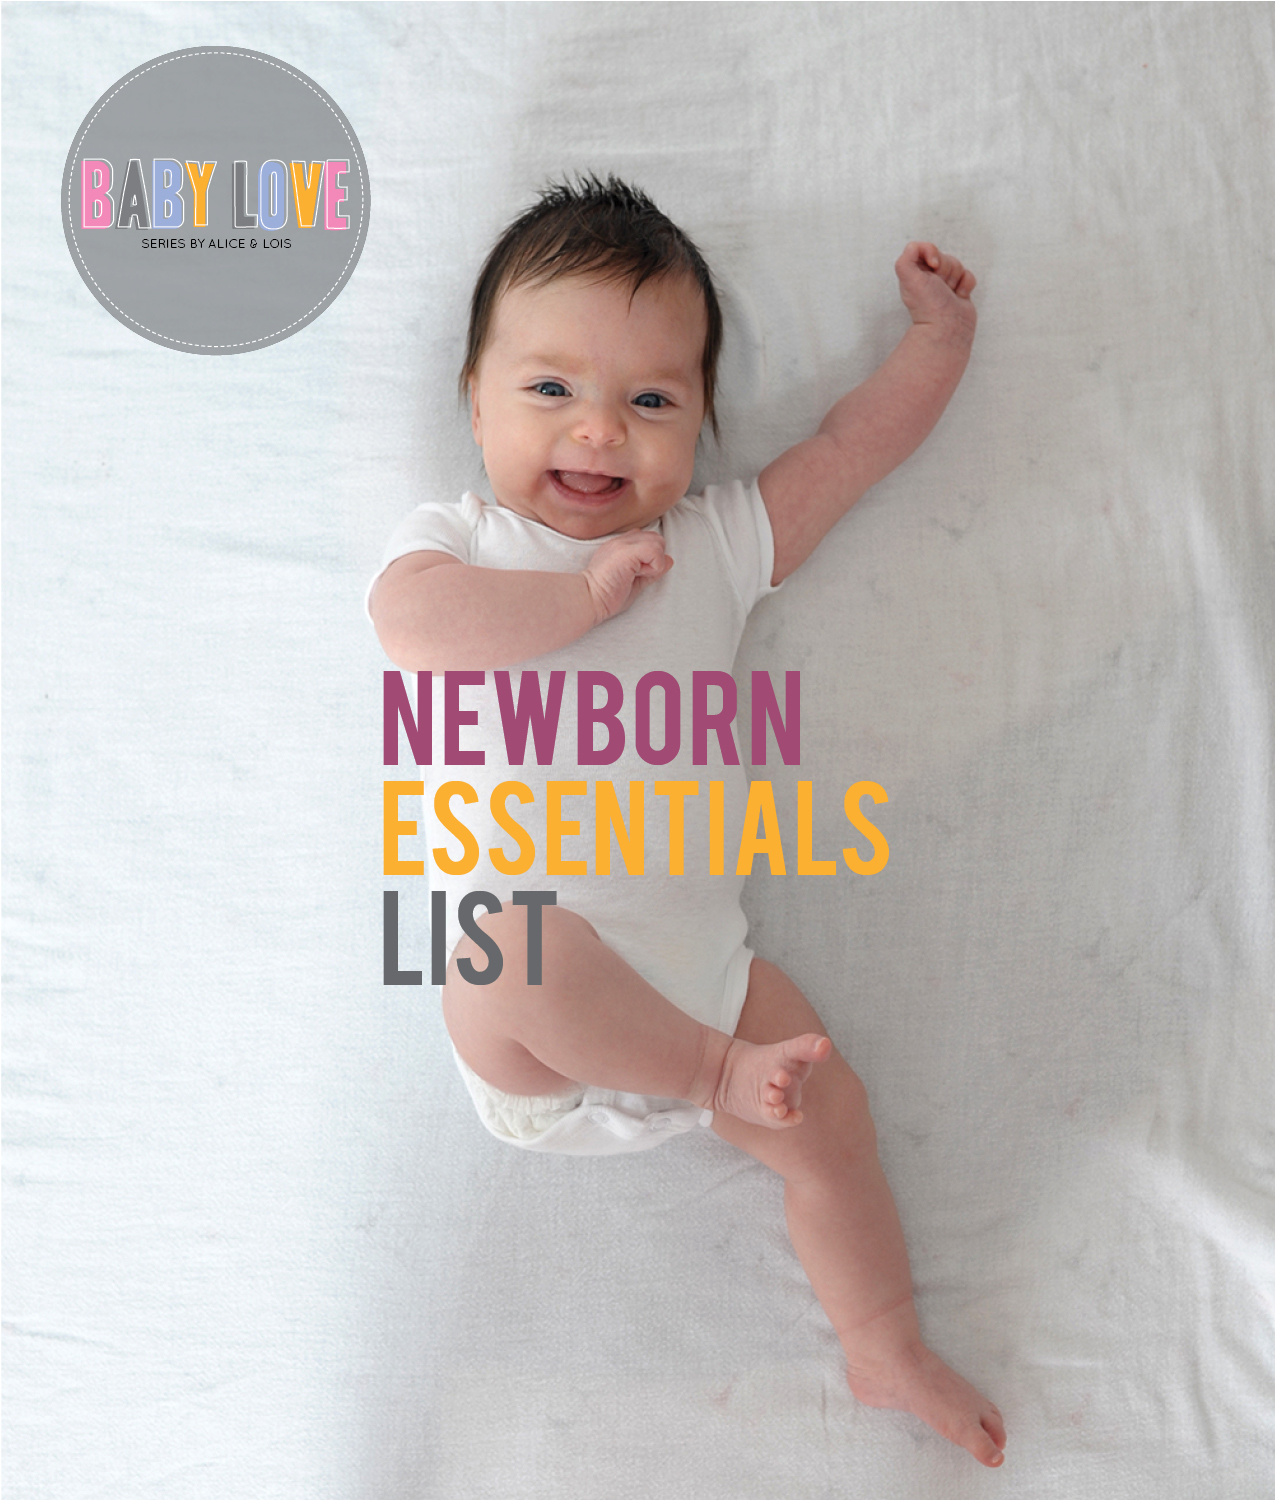 The Newborn Essentials List